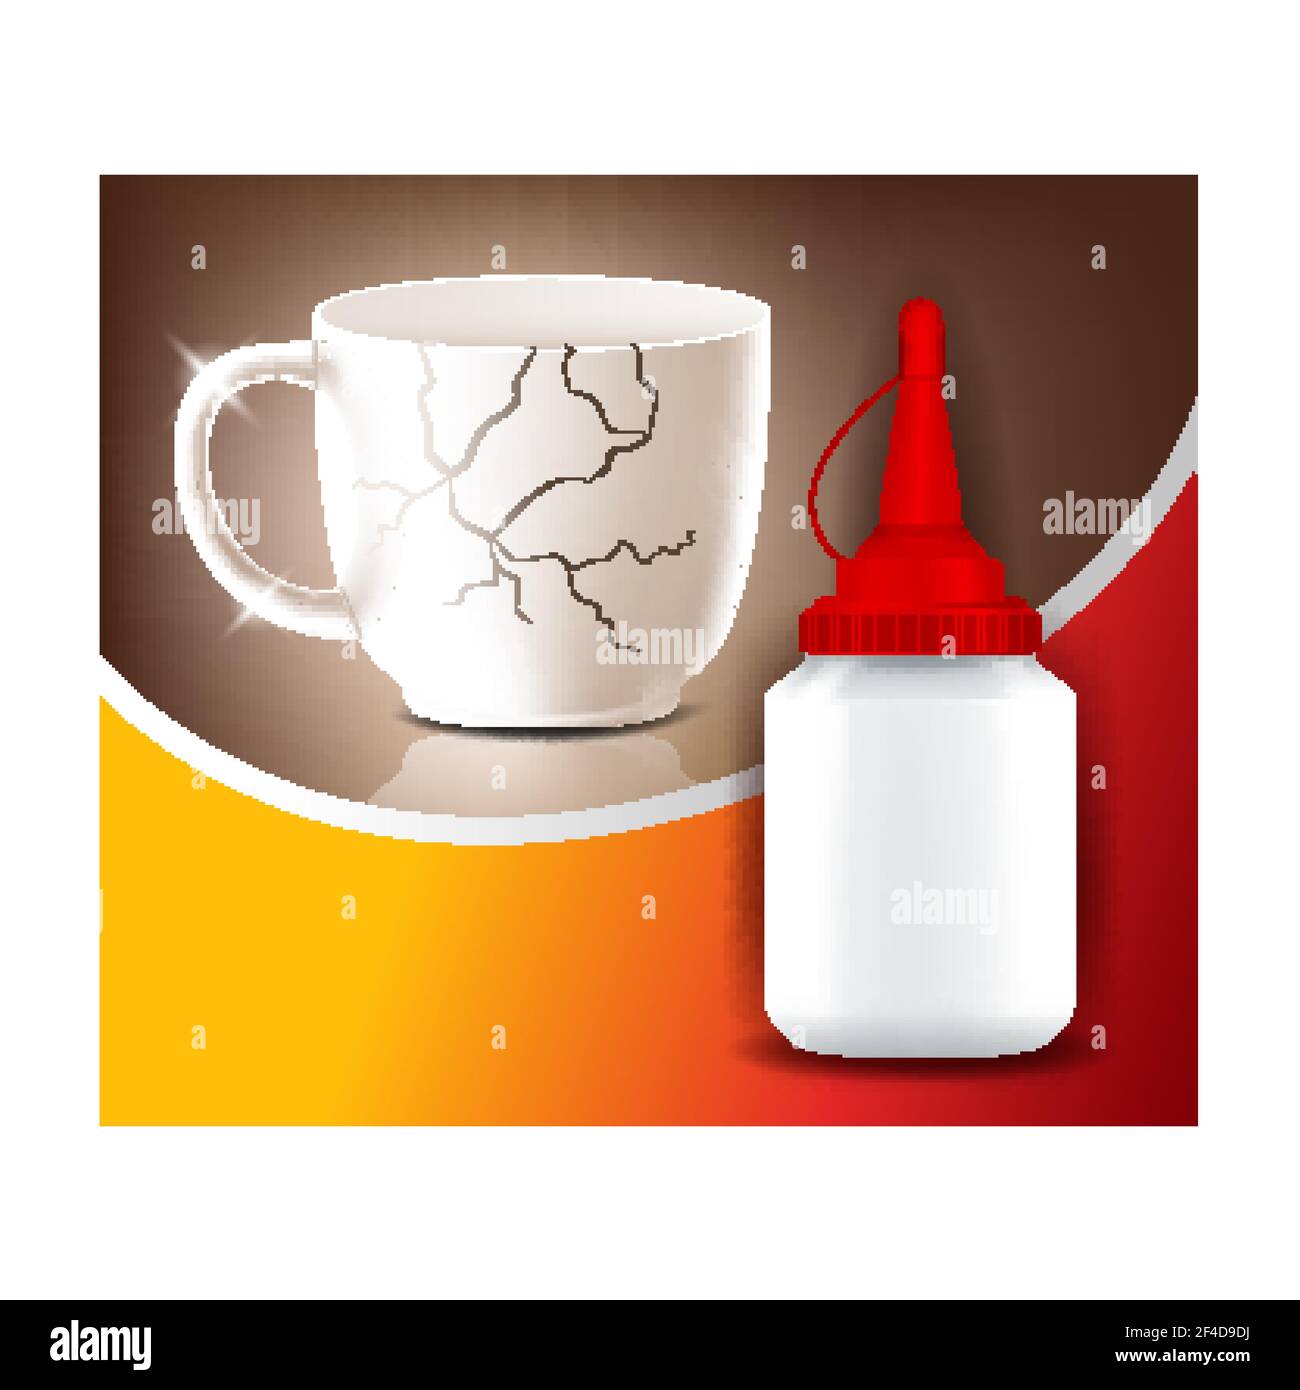 Super Glue Creative Advertising Poster Vector Illustration Stock Vector  Image & Art - Alamy